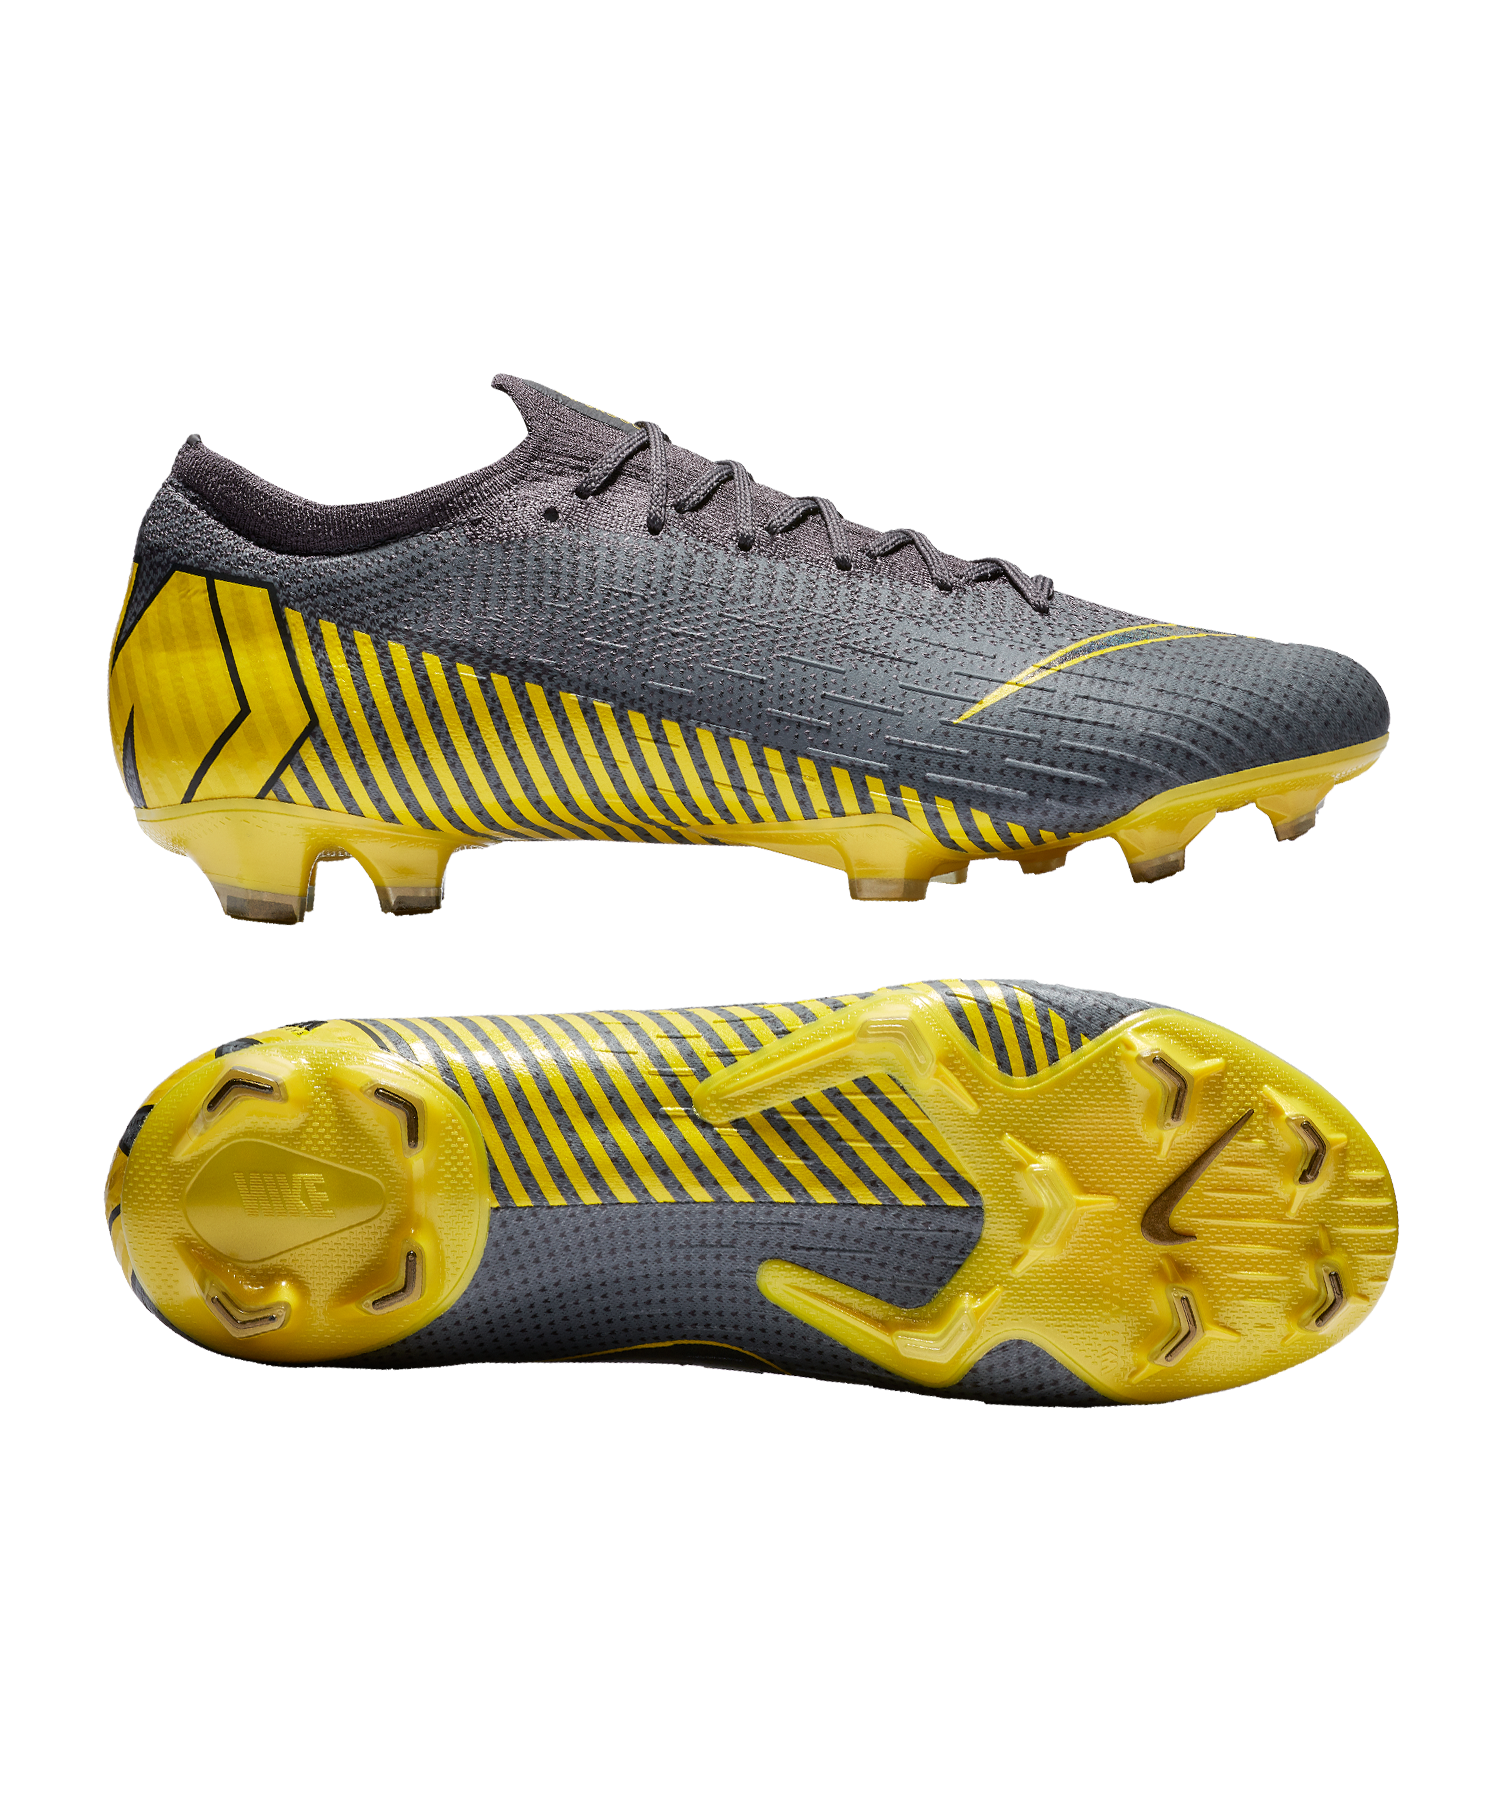 Football shoes Nike Mercurial Vapor 13 Pro Ic M AT8001 414 blue.